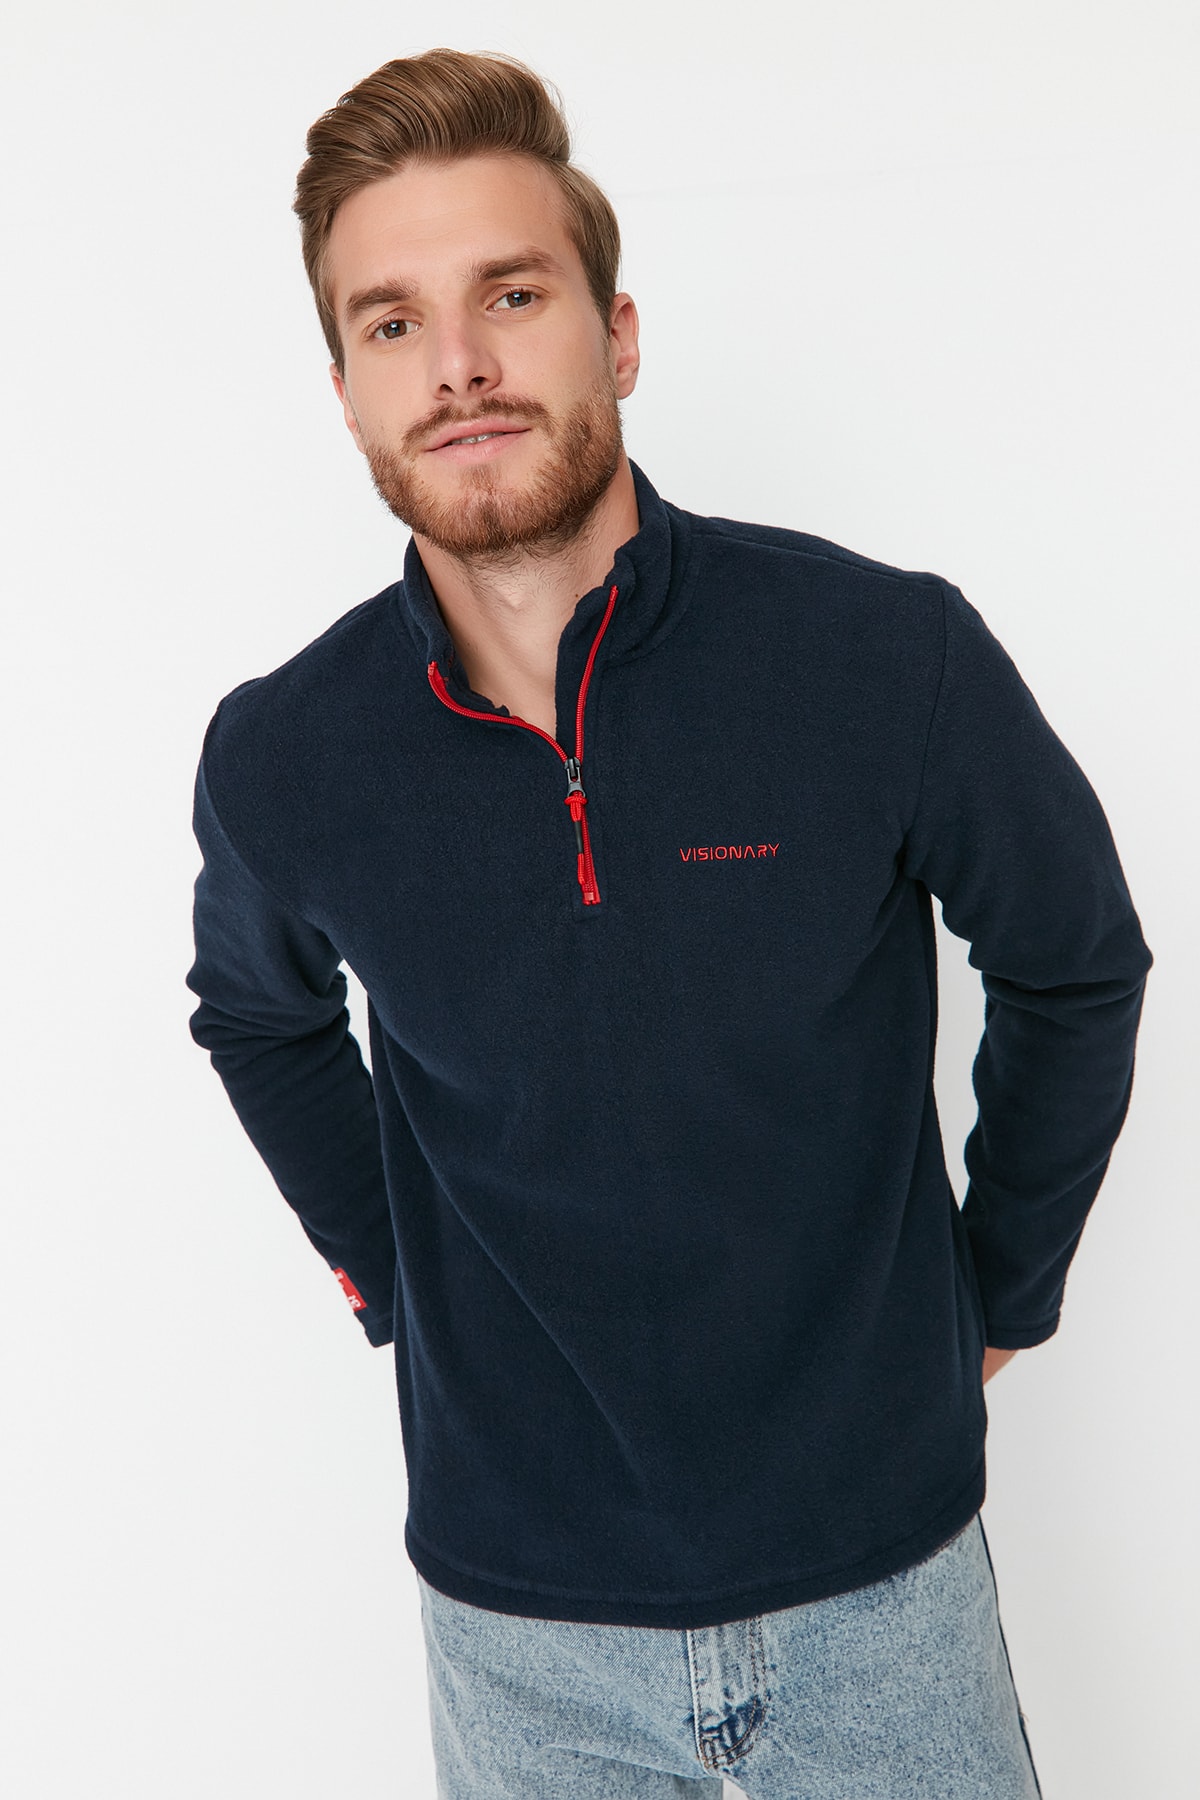 Trendyol Navy Blue Men's Regular/Normal Cut Zippered Stand Collar Embroidered Label Thick Sweatshir